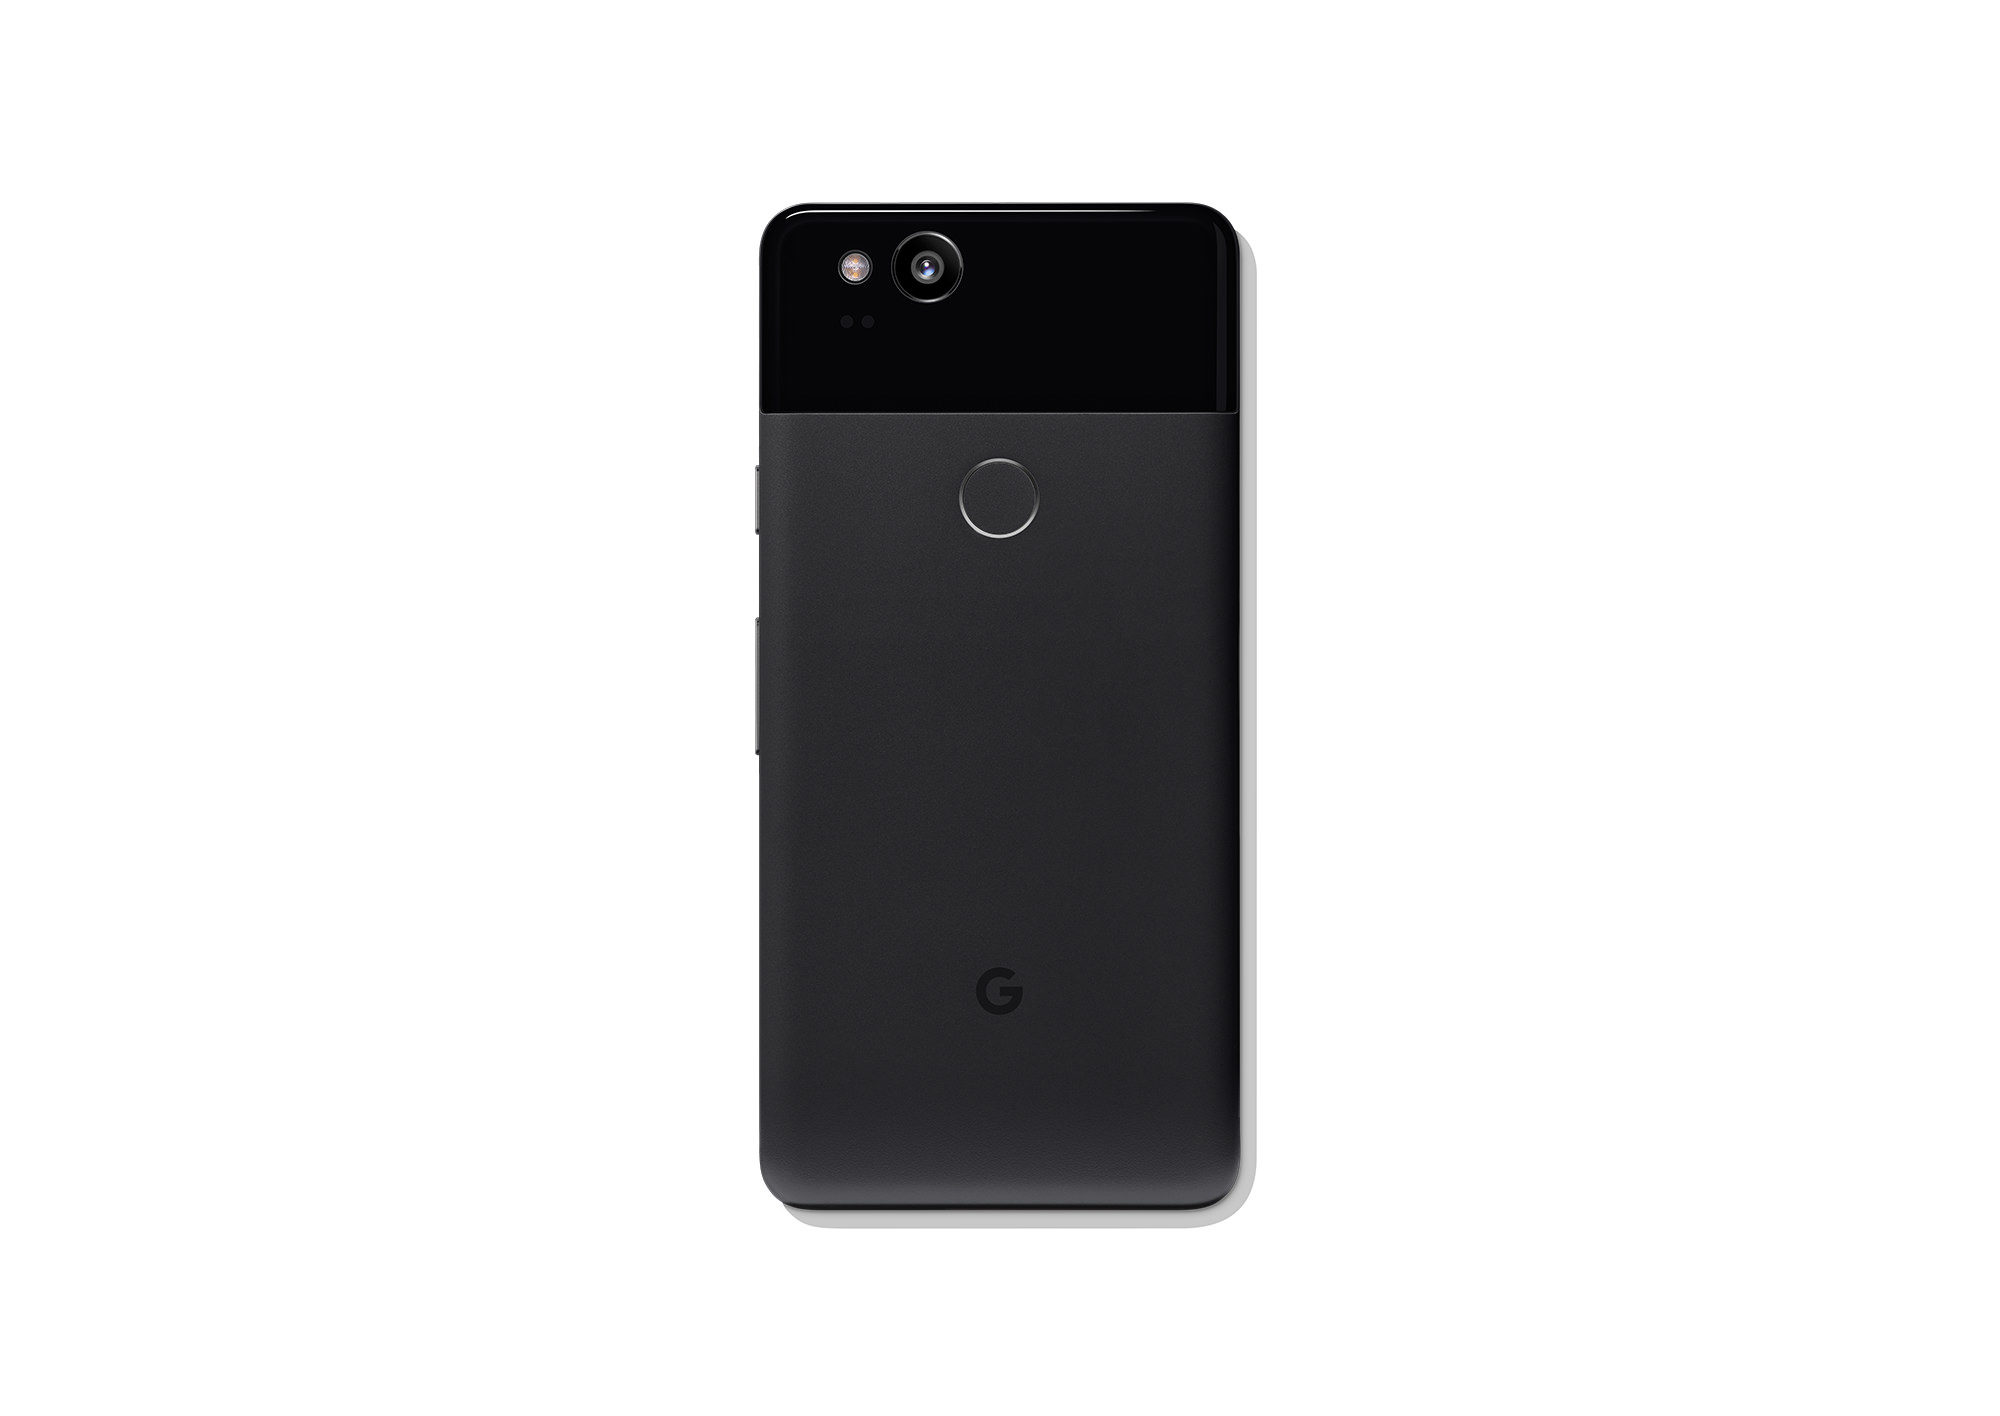 Google Pixel 2 64GB Verizon Smartphone, Black - image 3 of 7